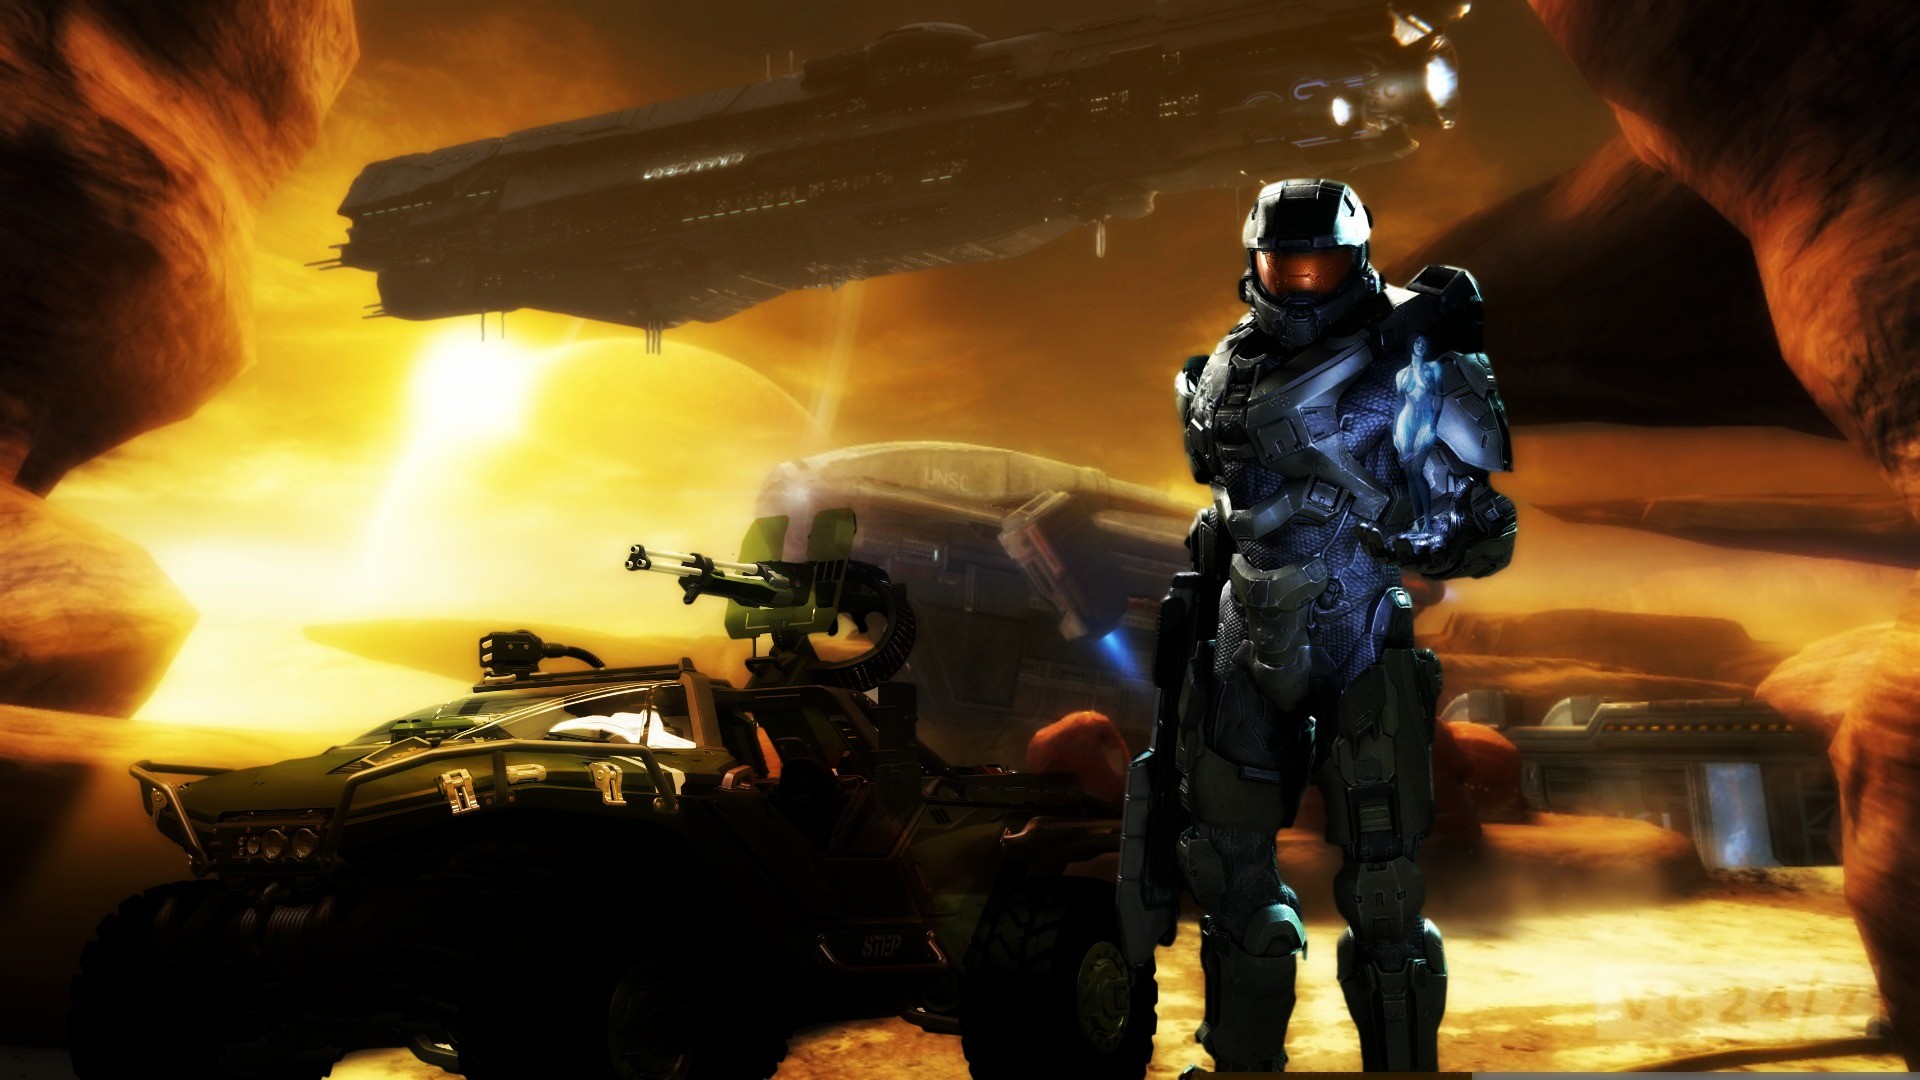 Halo Master Chief Cortana Halo 4 Xbox Video Games 1920x1080